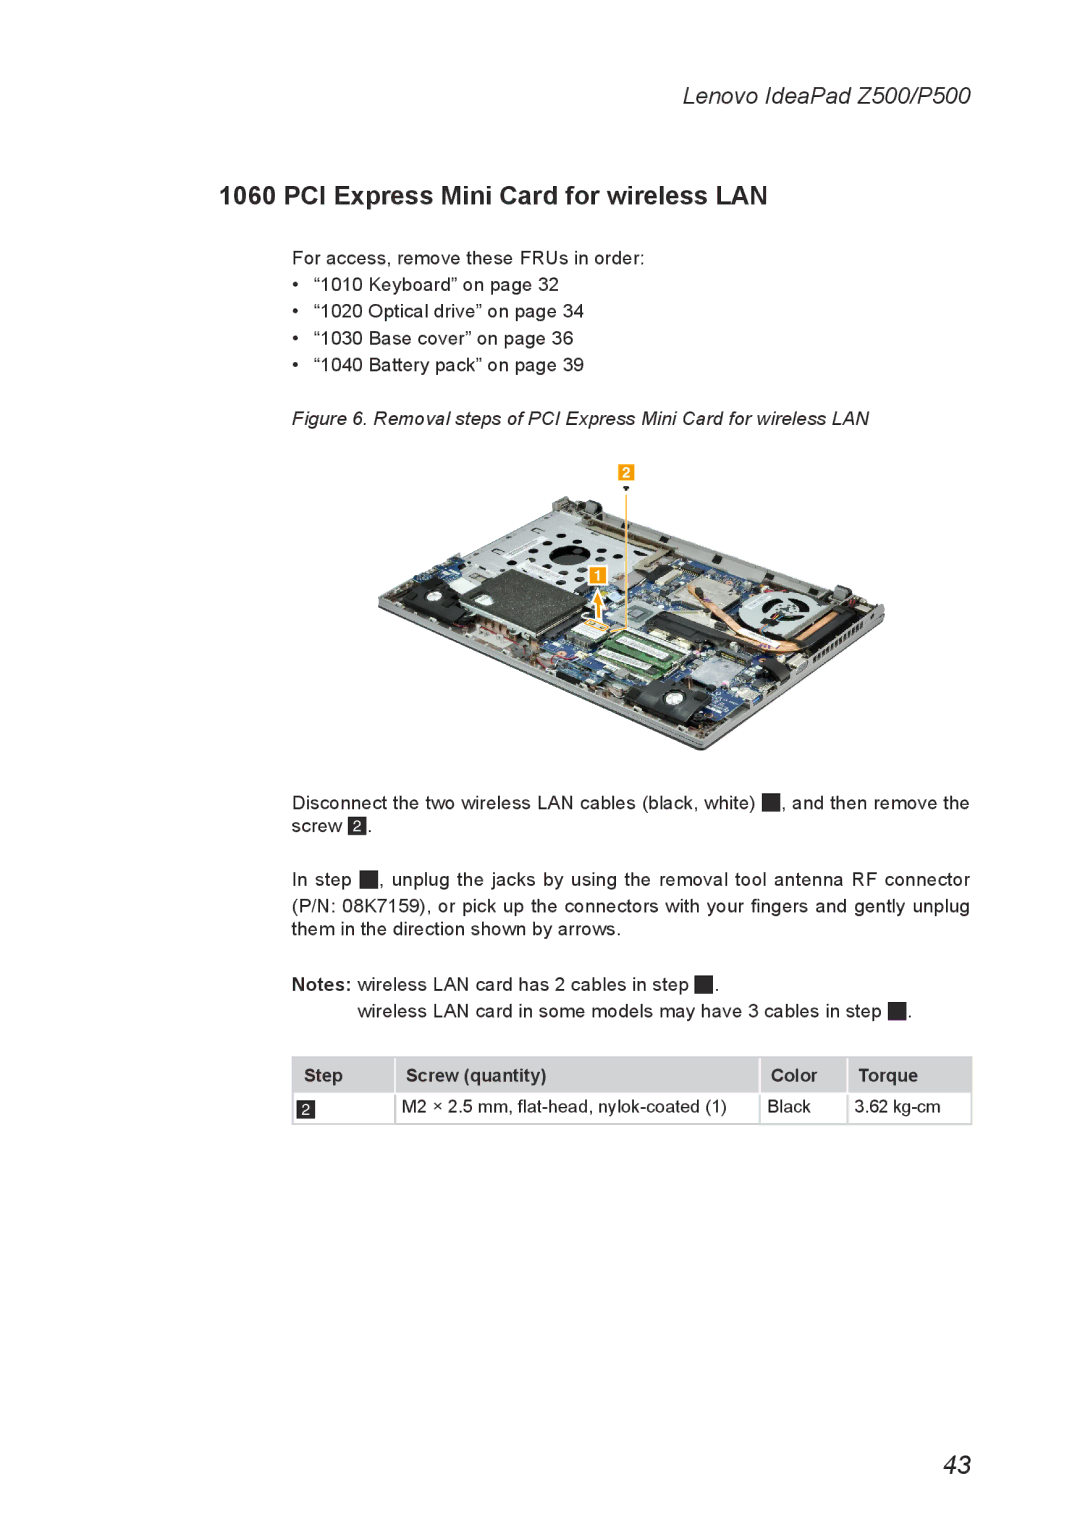 Lenovo P500, Z500 manual Removal steps of PCI Express Mini Card for wireless LAN 